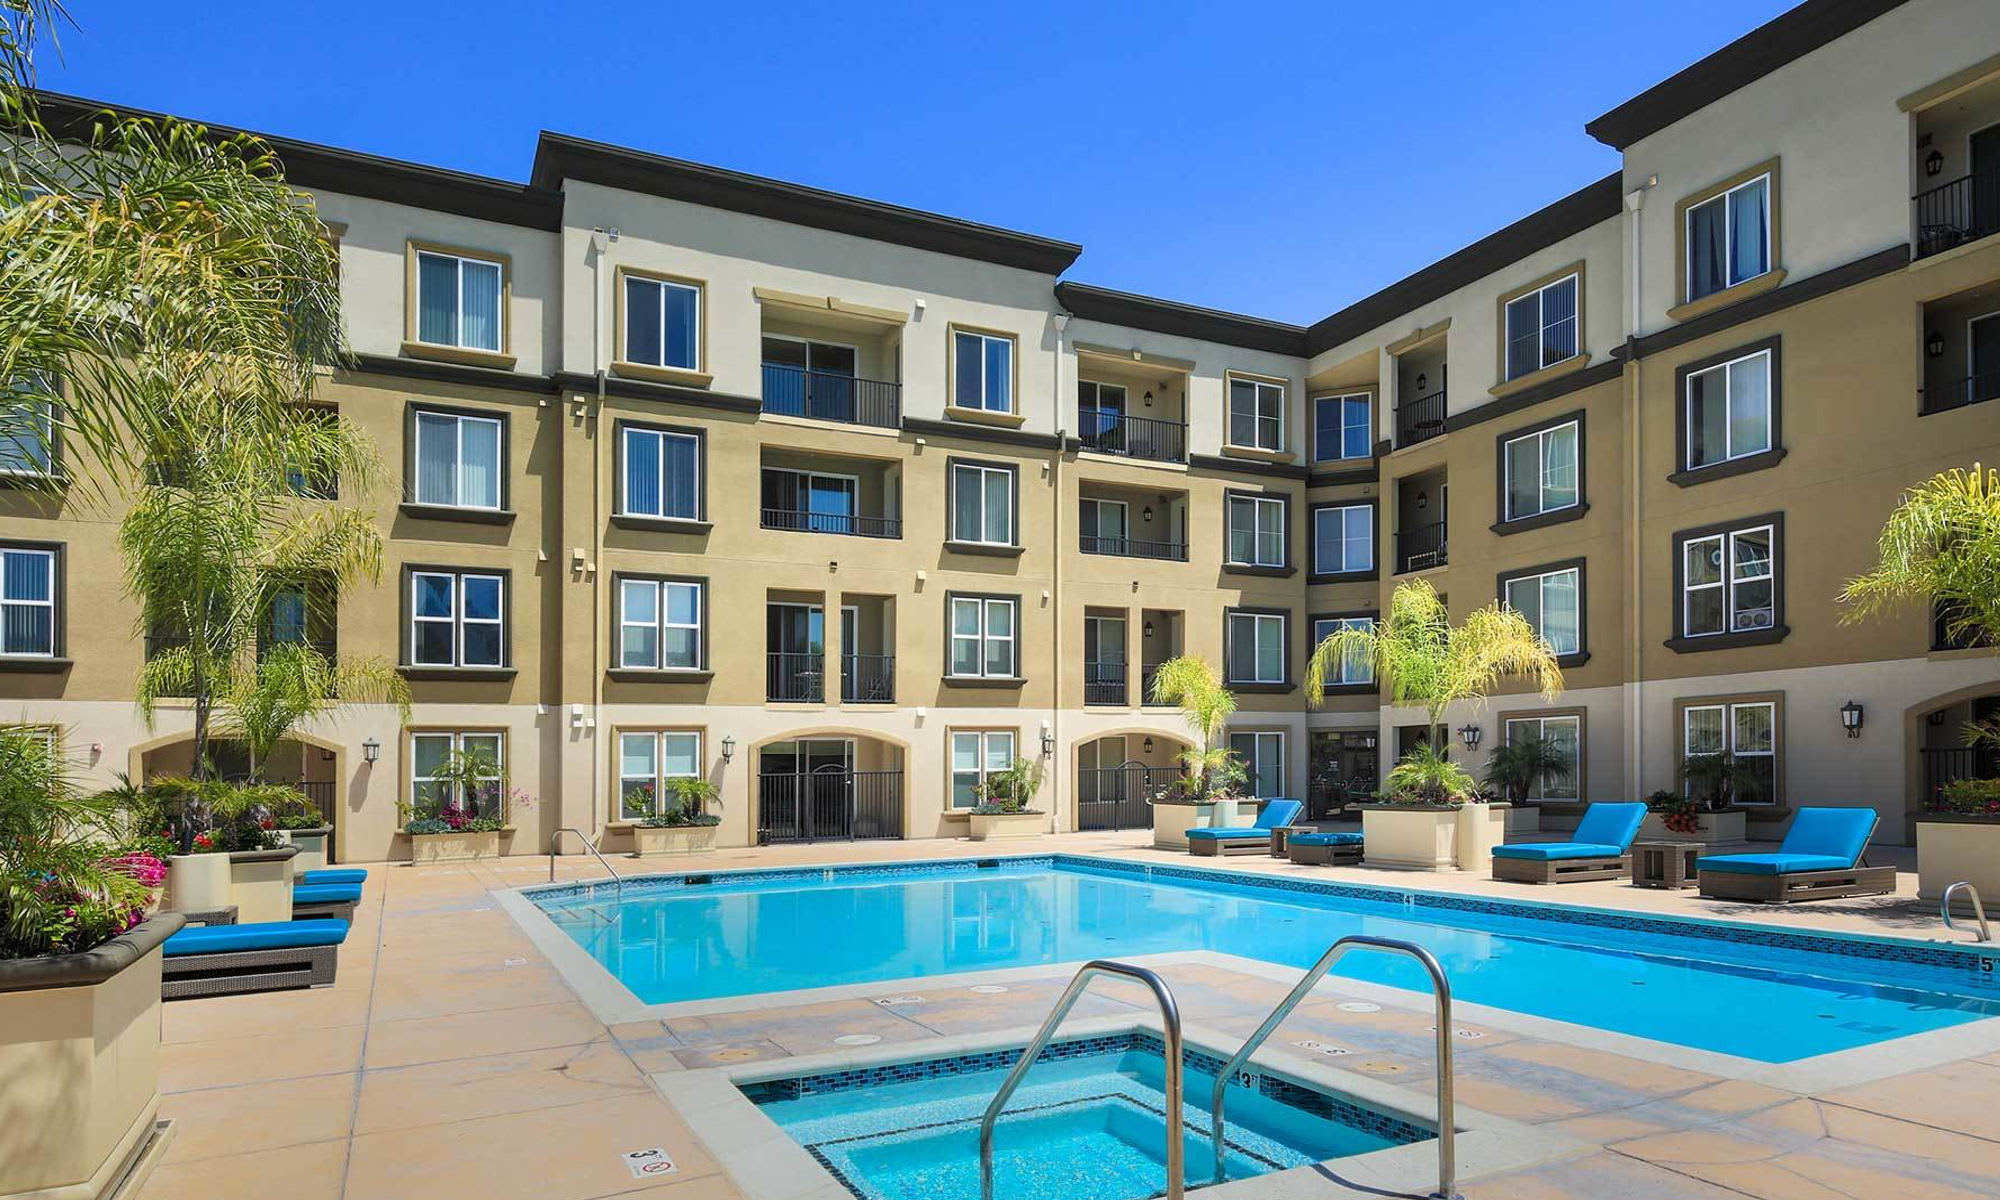 Apartments in San Jose, CA